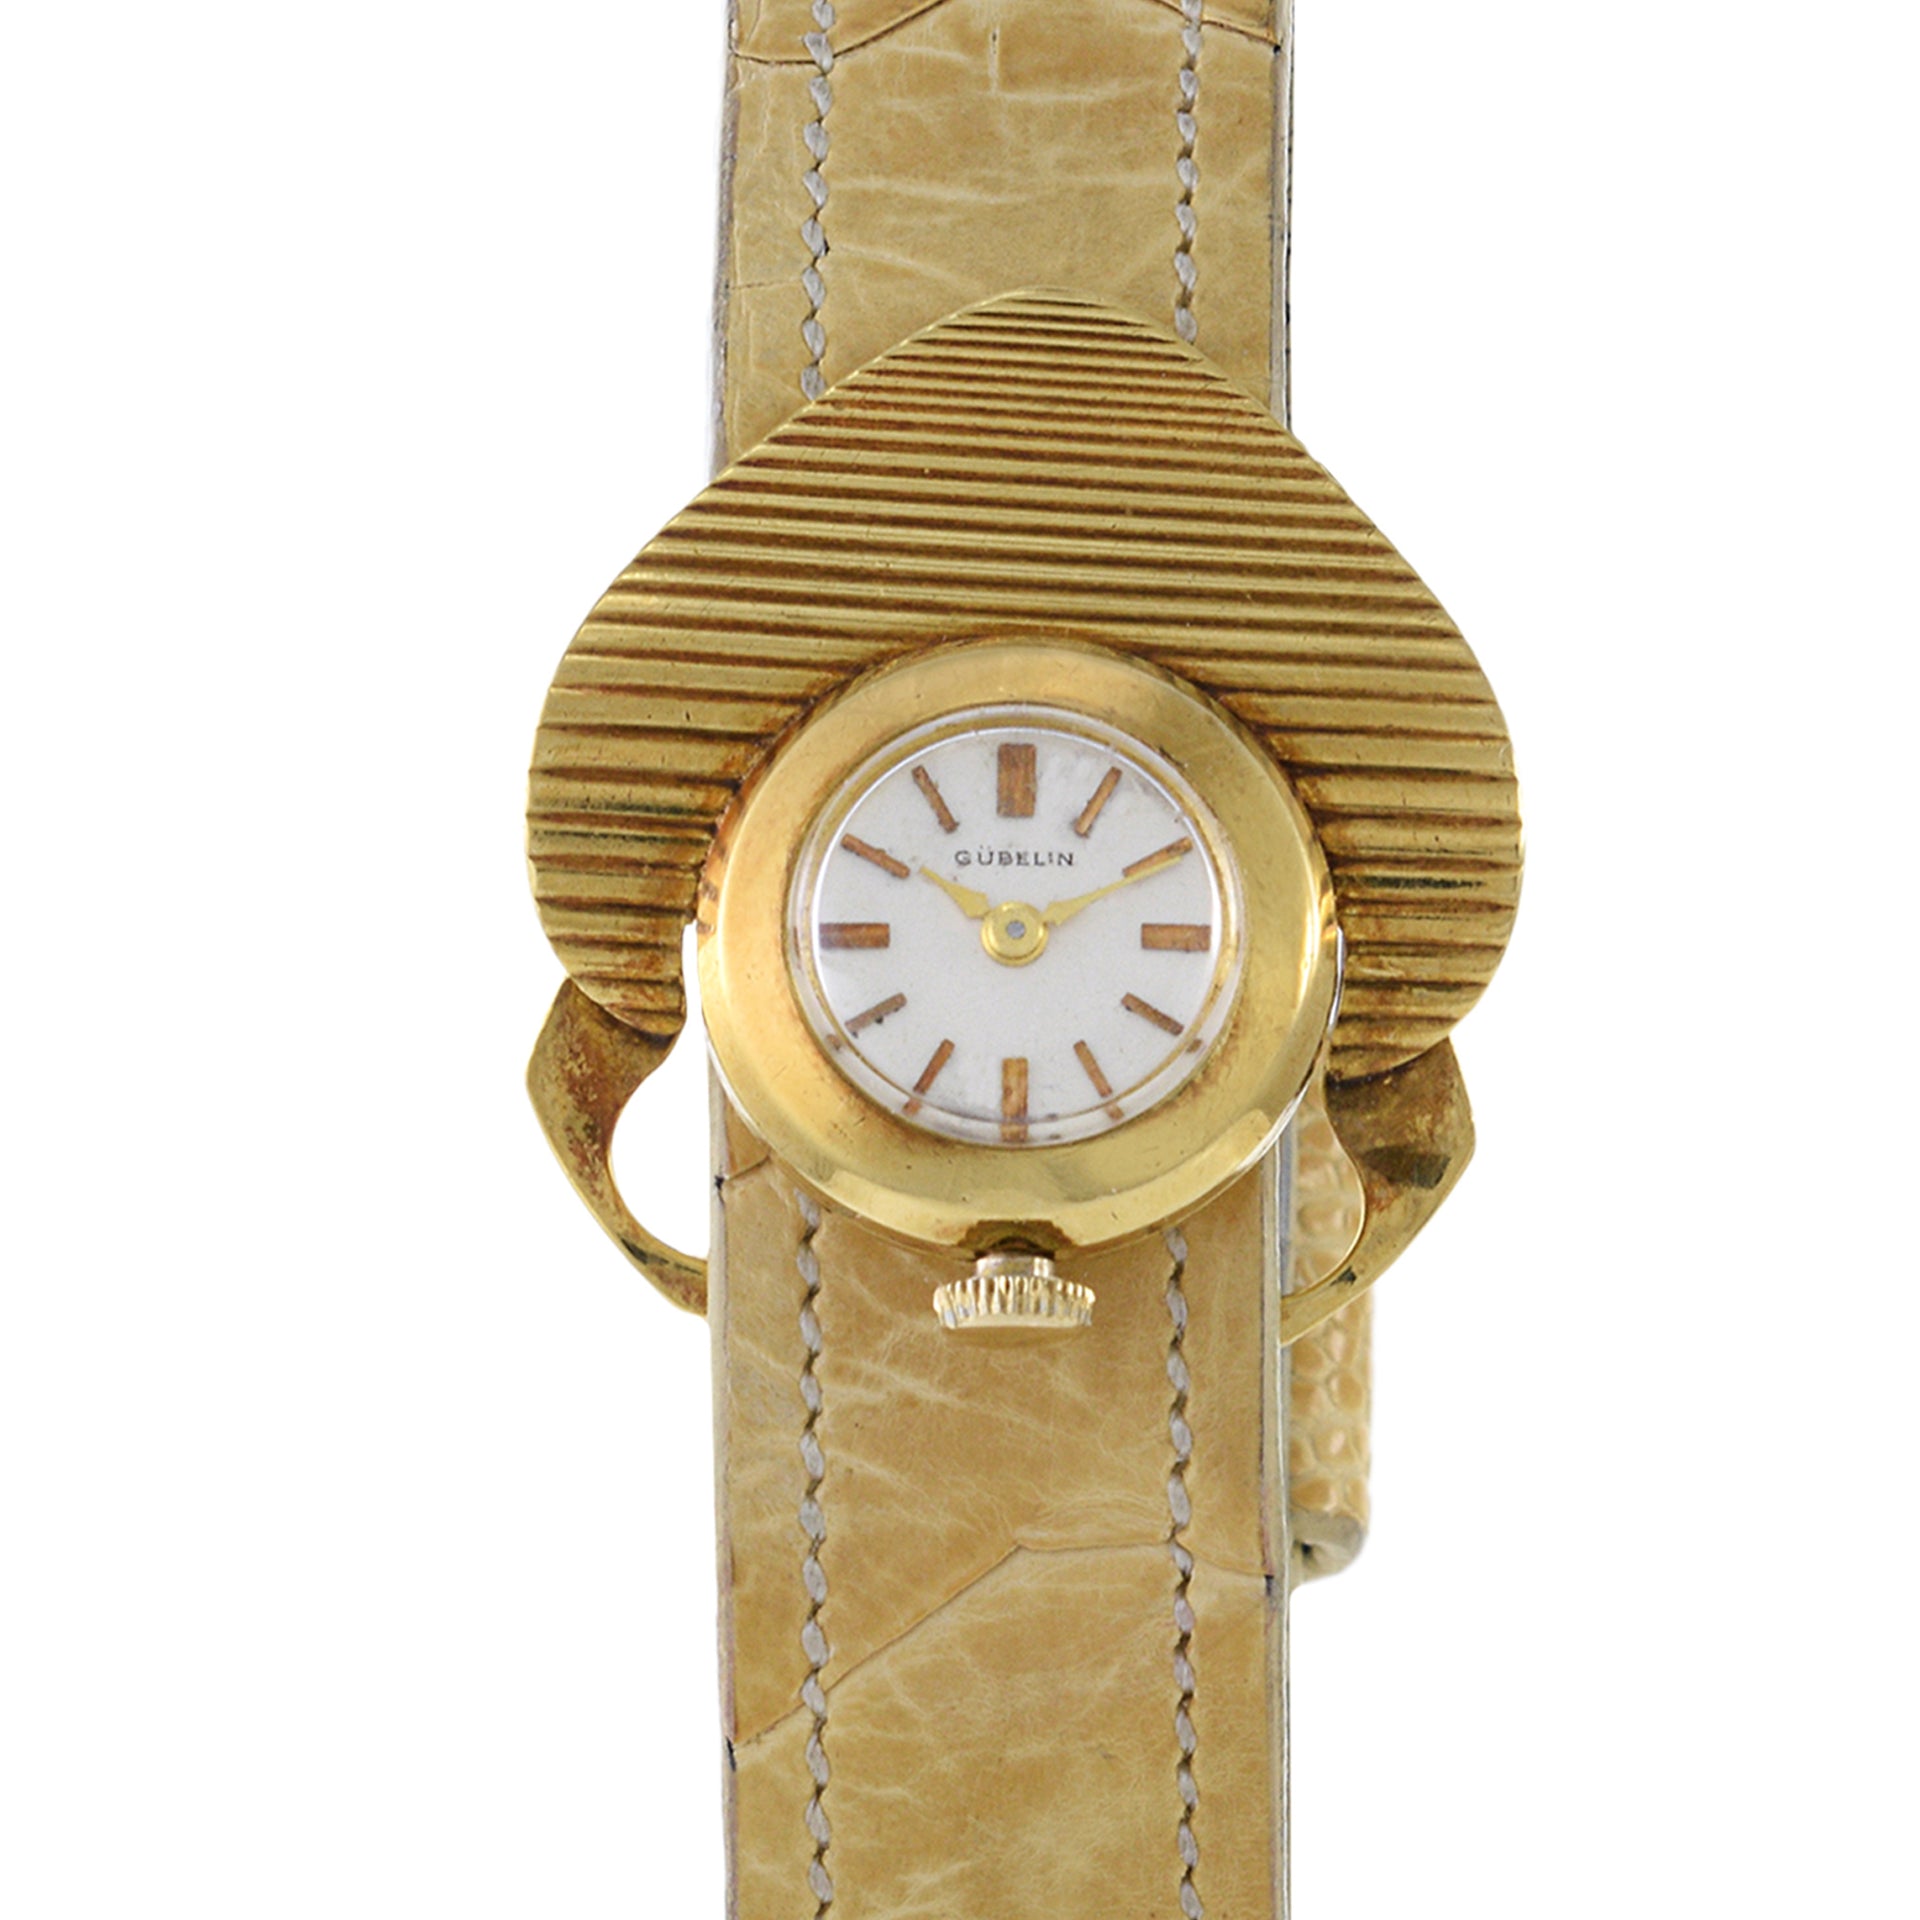 Gubelin 18K Gold Heart Shaped Cocktail Watch Manual Wind